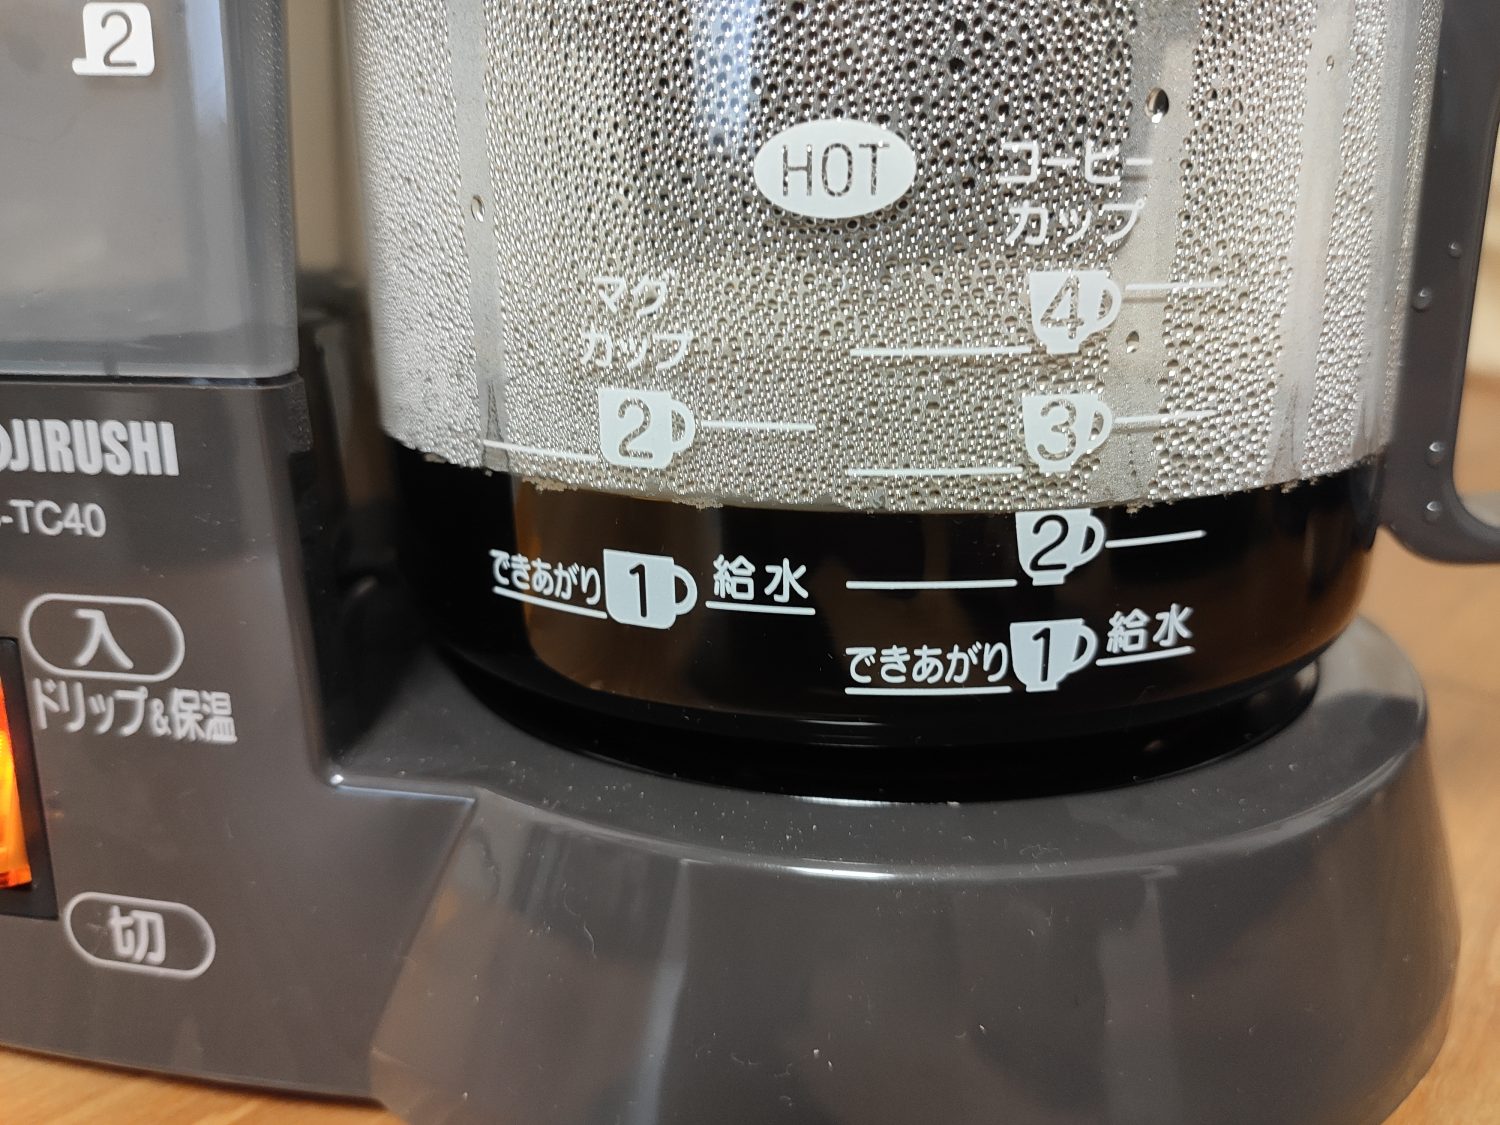 coffee-brewing-in-machine